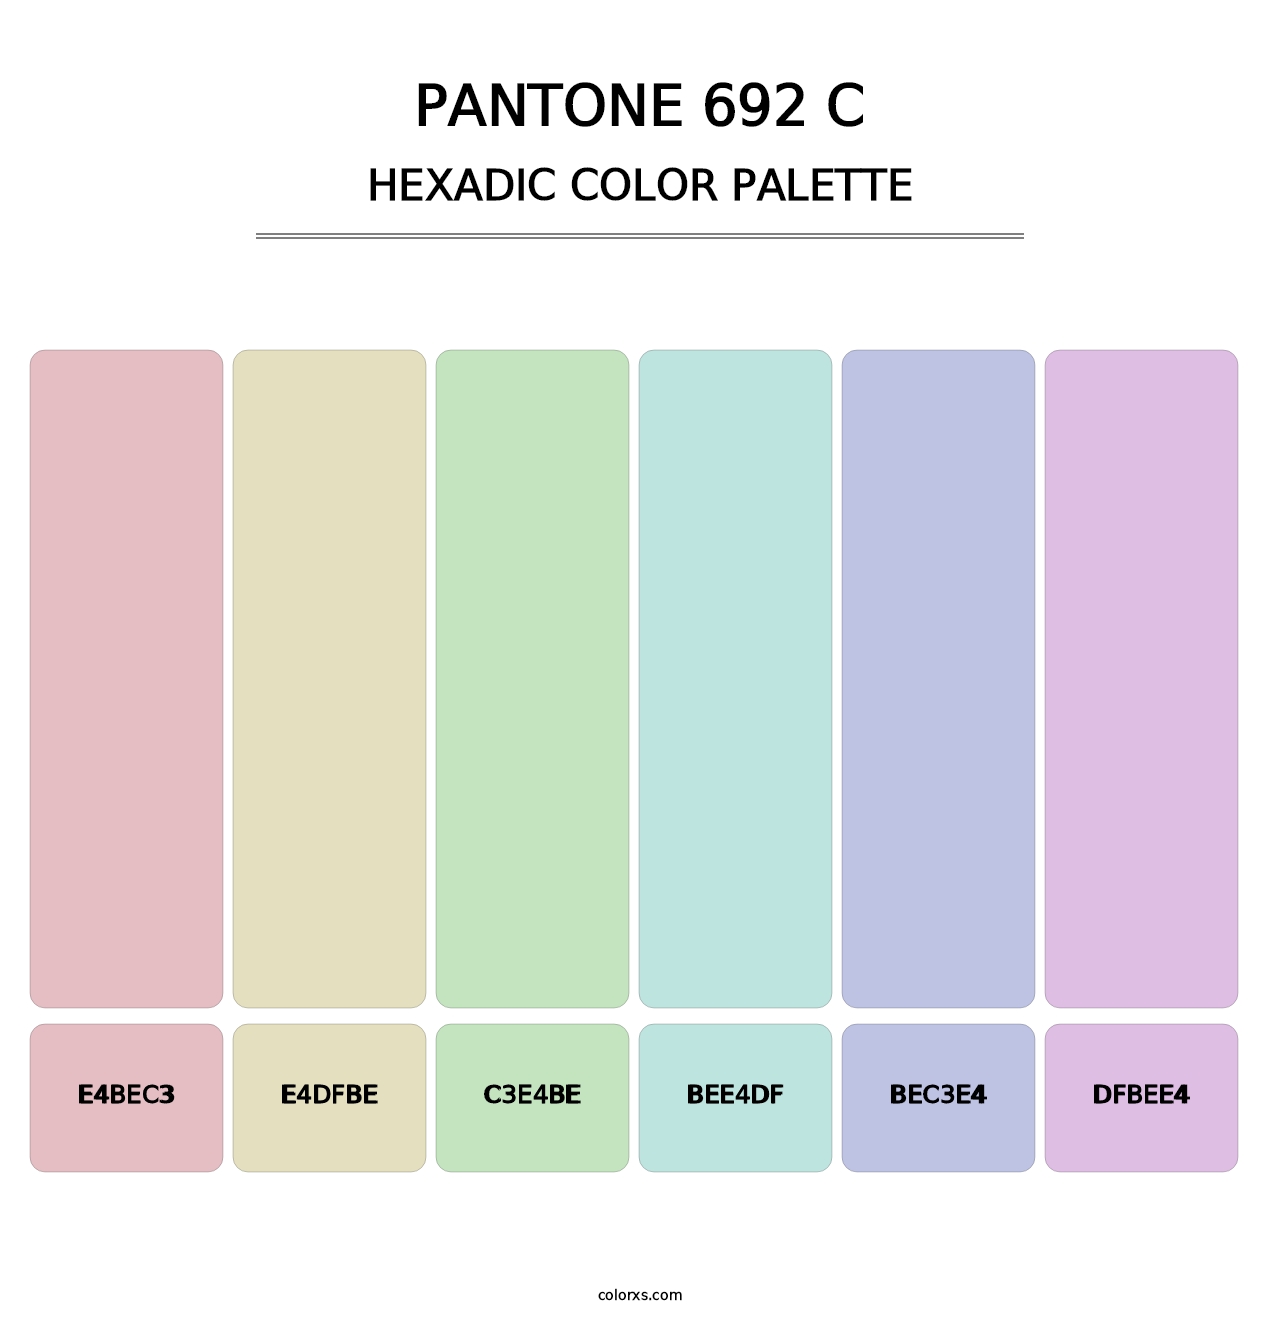 PANTONE 692 C - Hexadic Color Palette